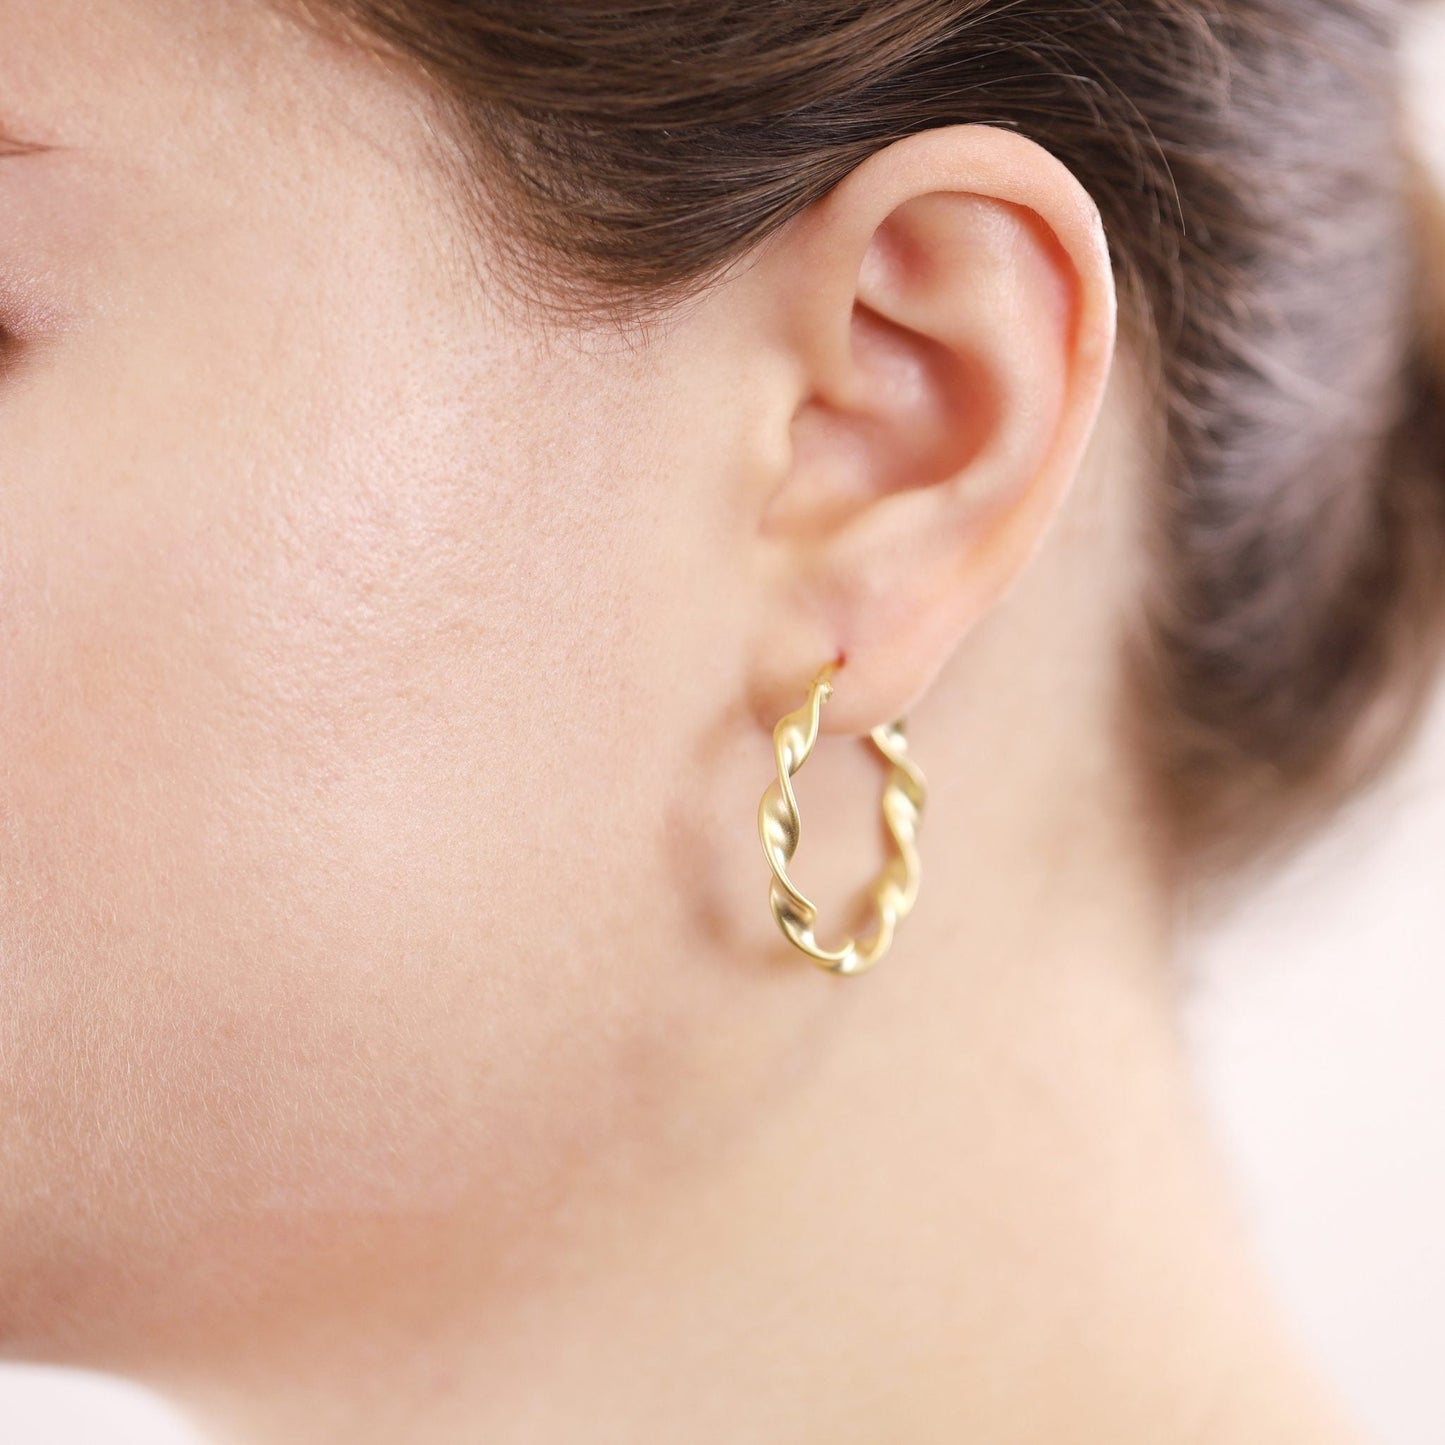 18ct 1 Micron Gold plated plain hoop earrings PER2001 - FJewellery